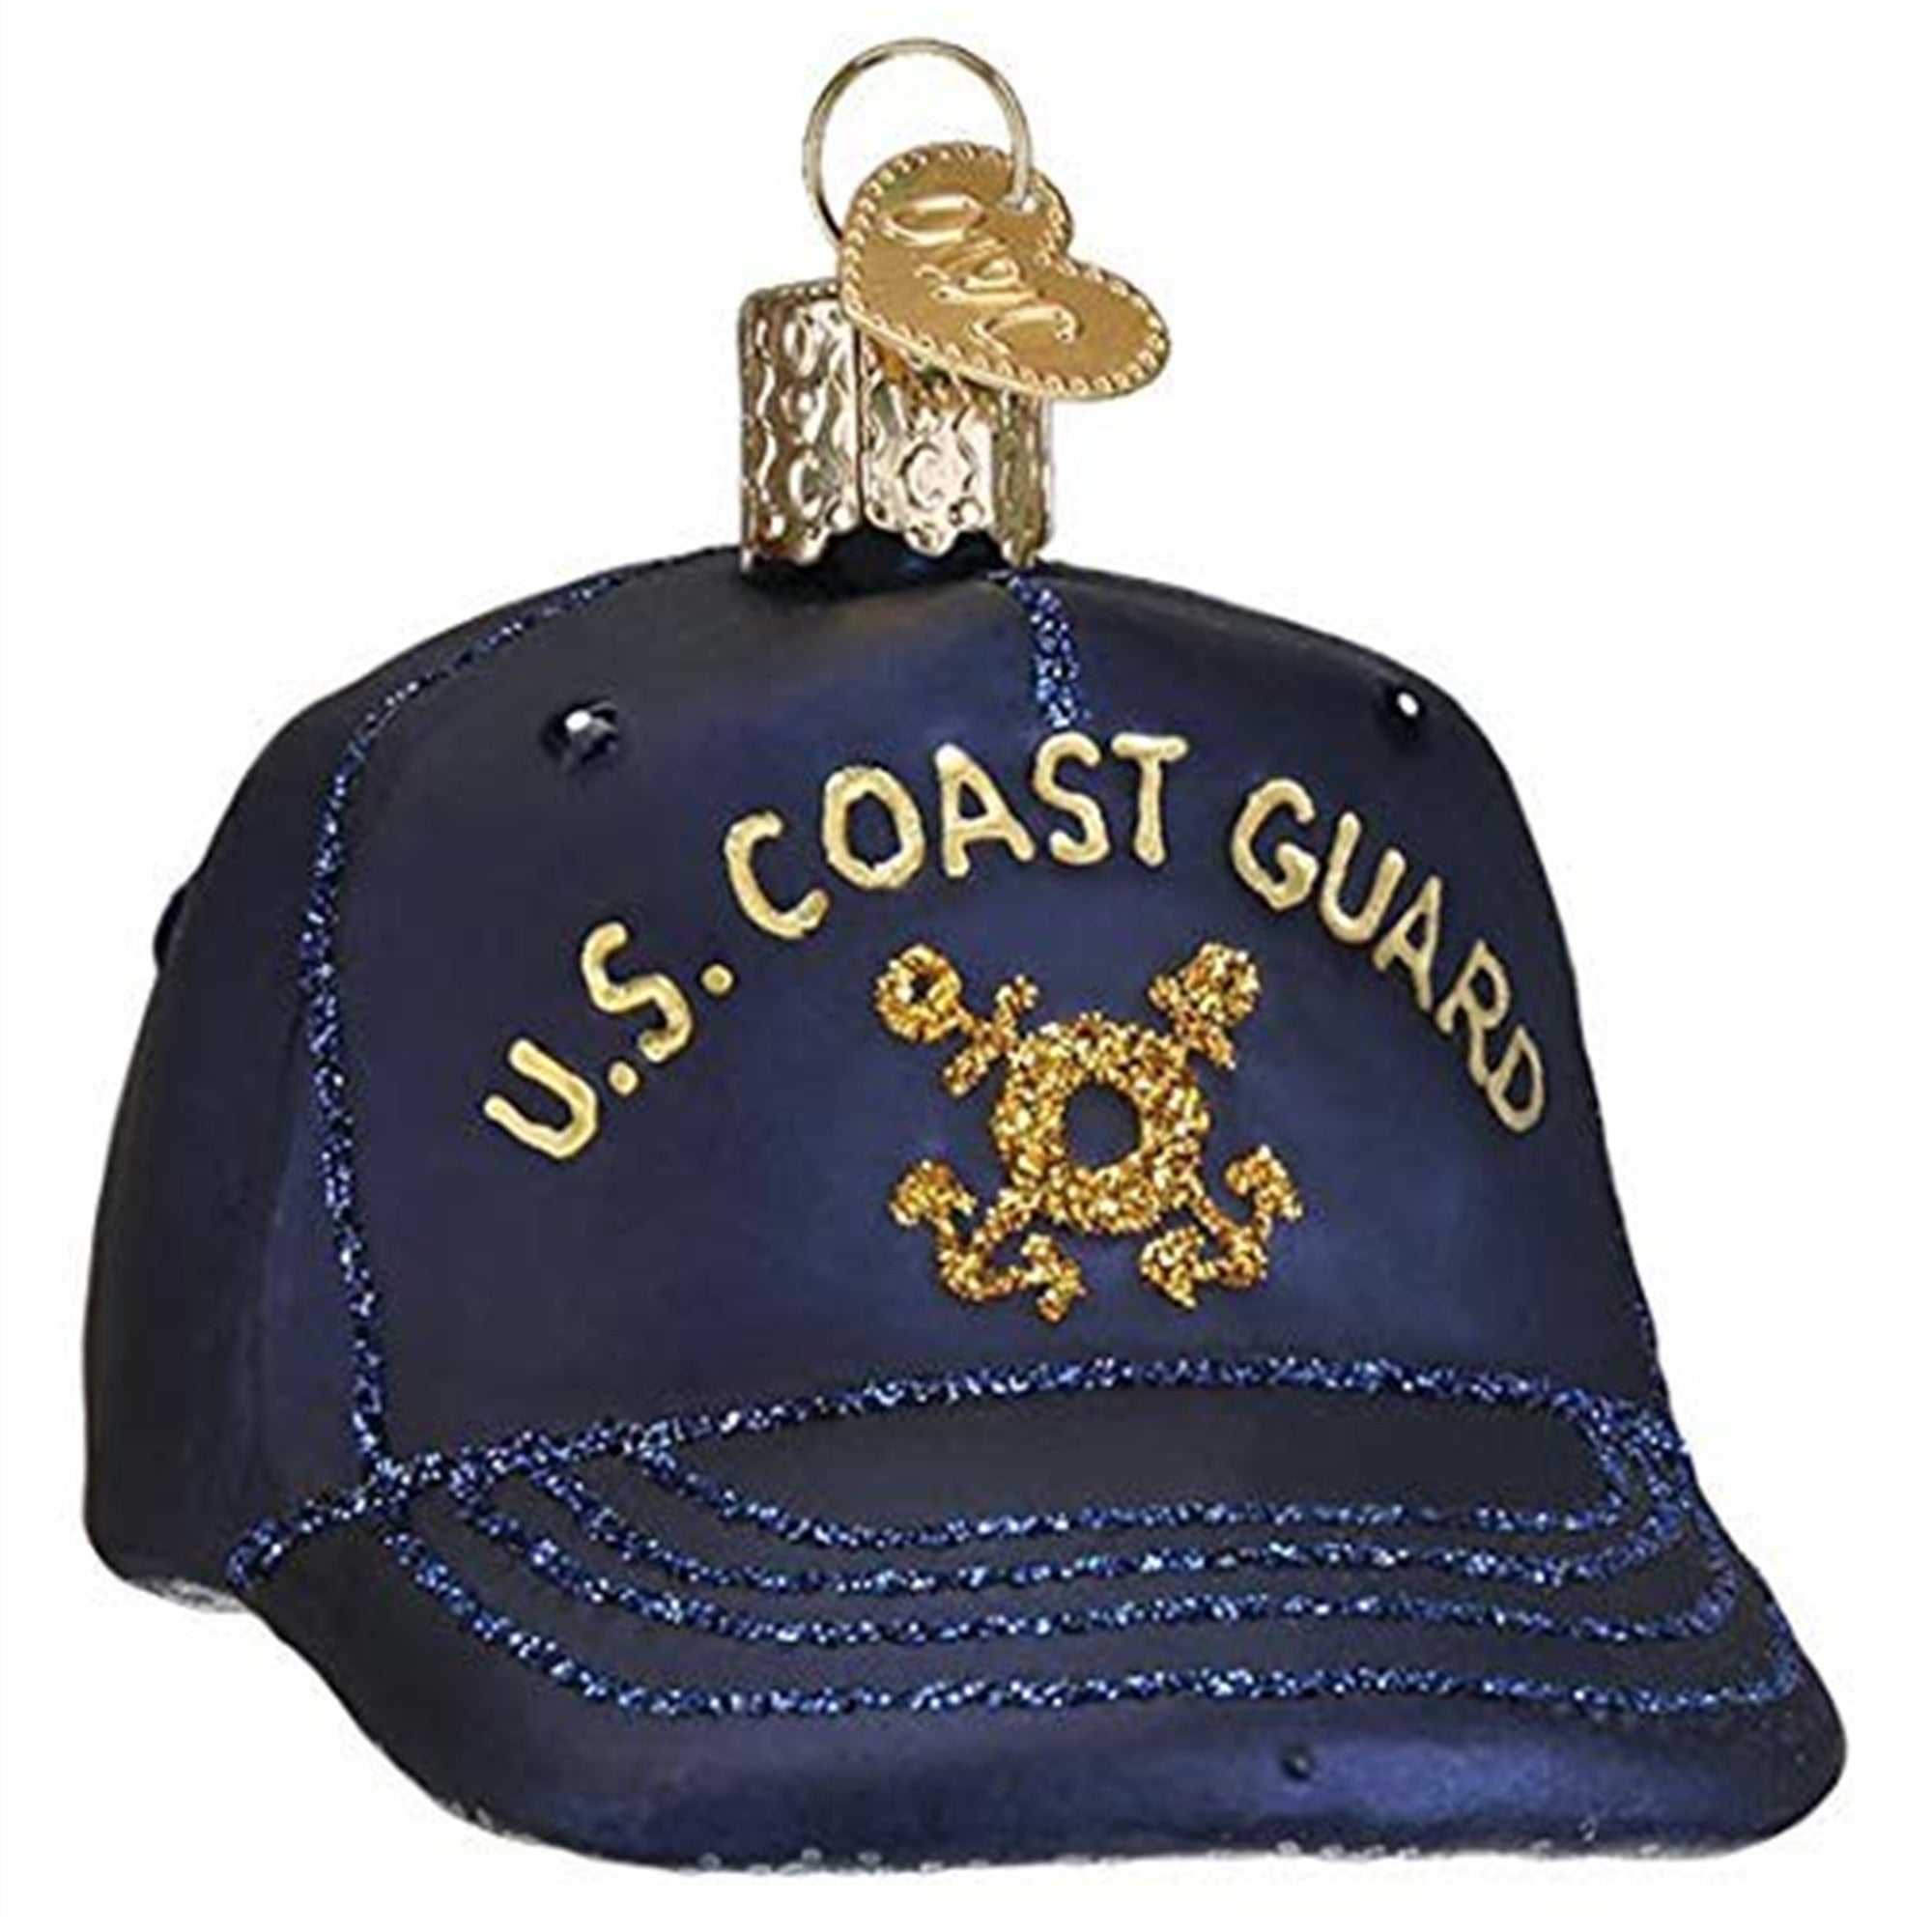 Old World Christmas Glass Blown Coast Guard Cap Ornament